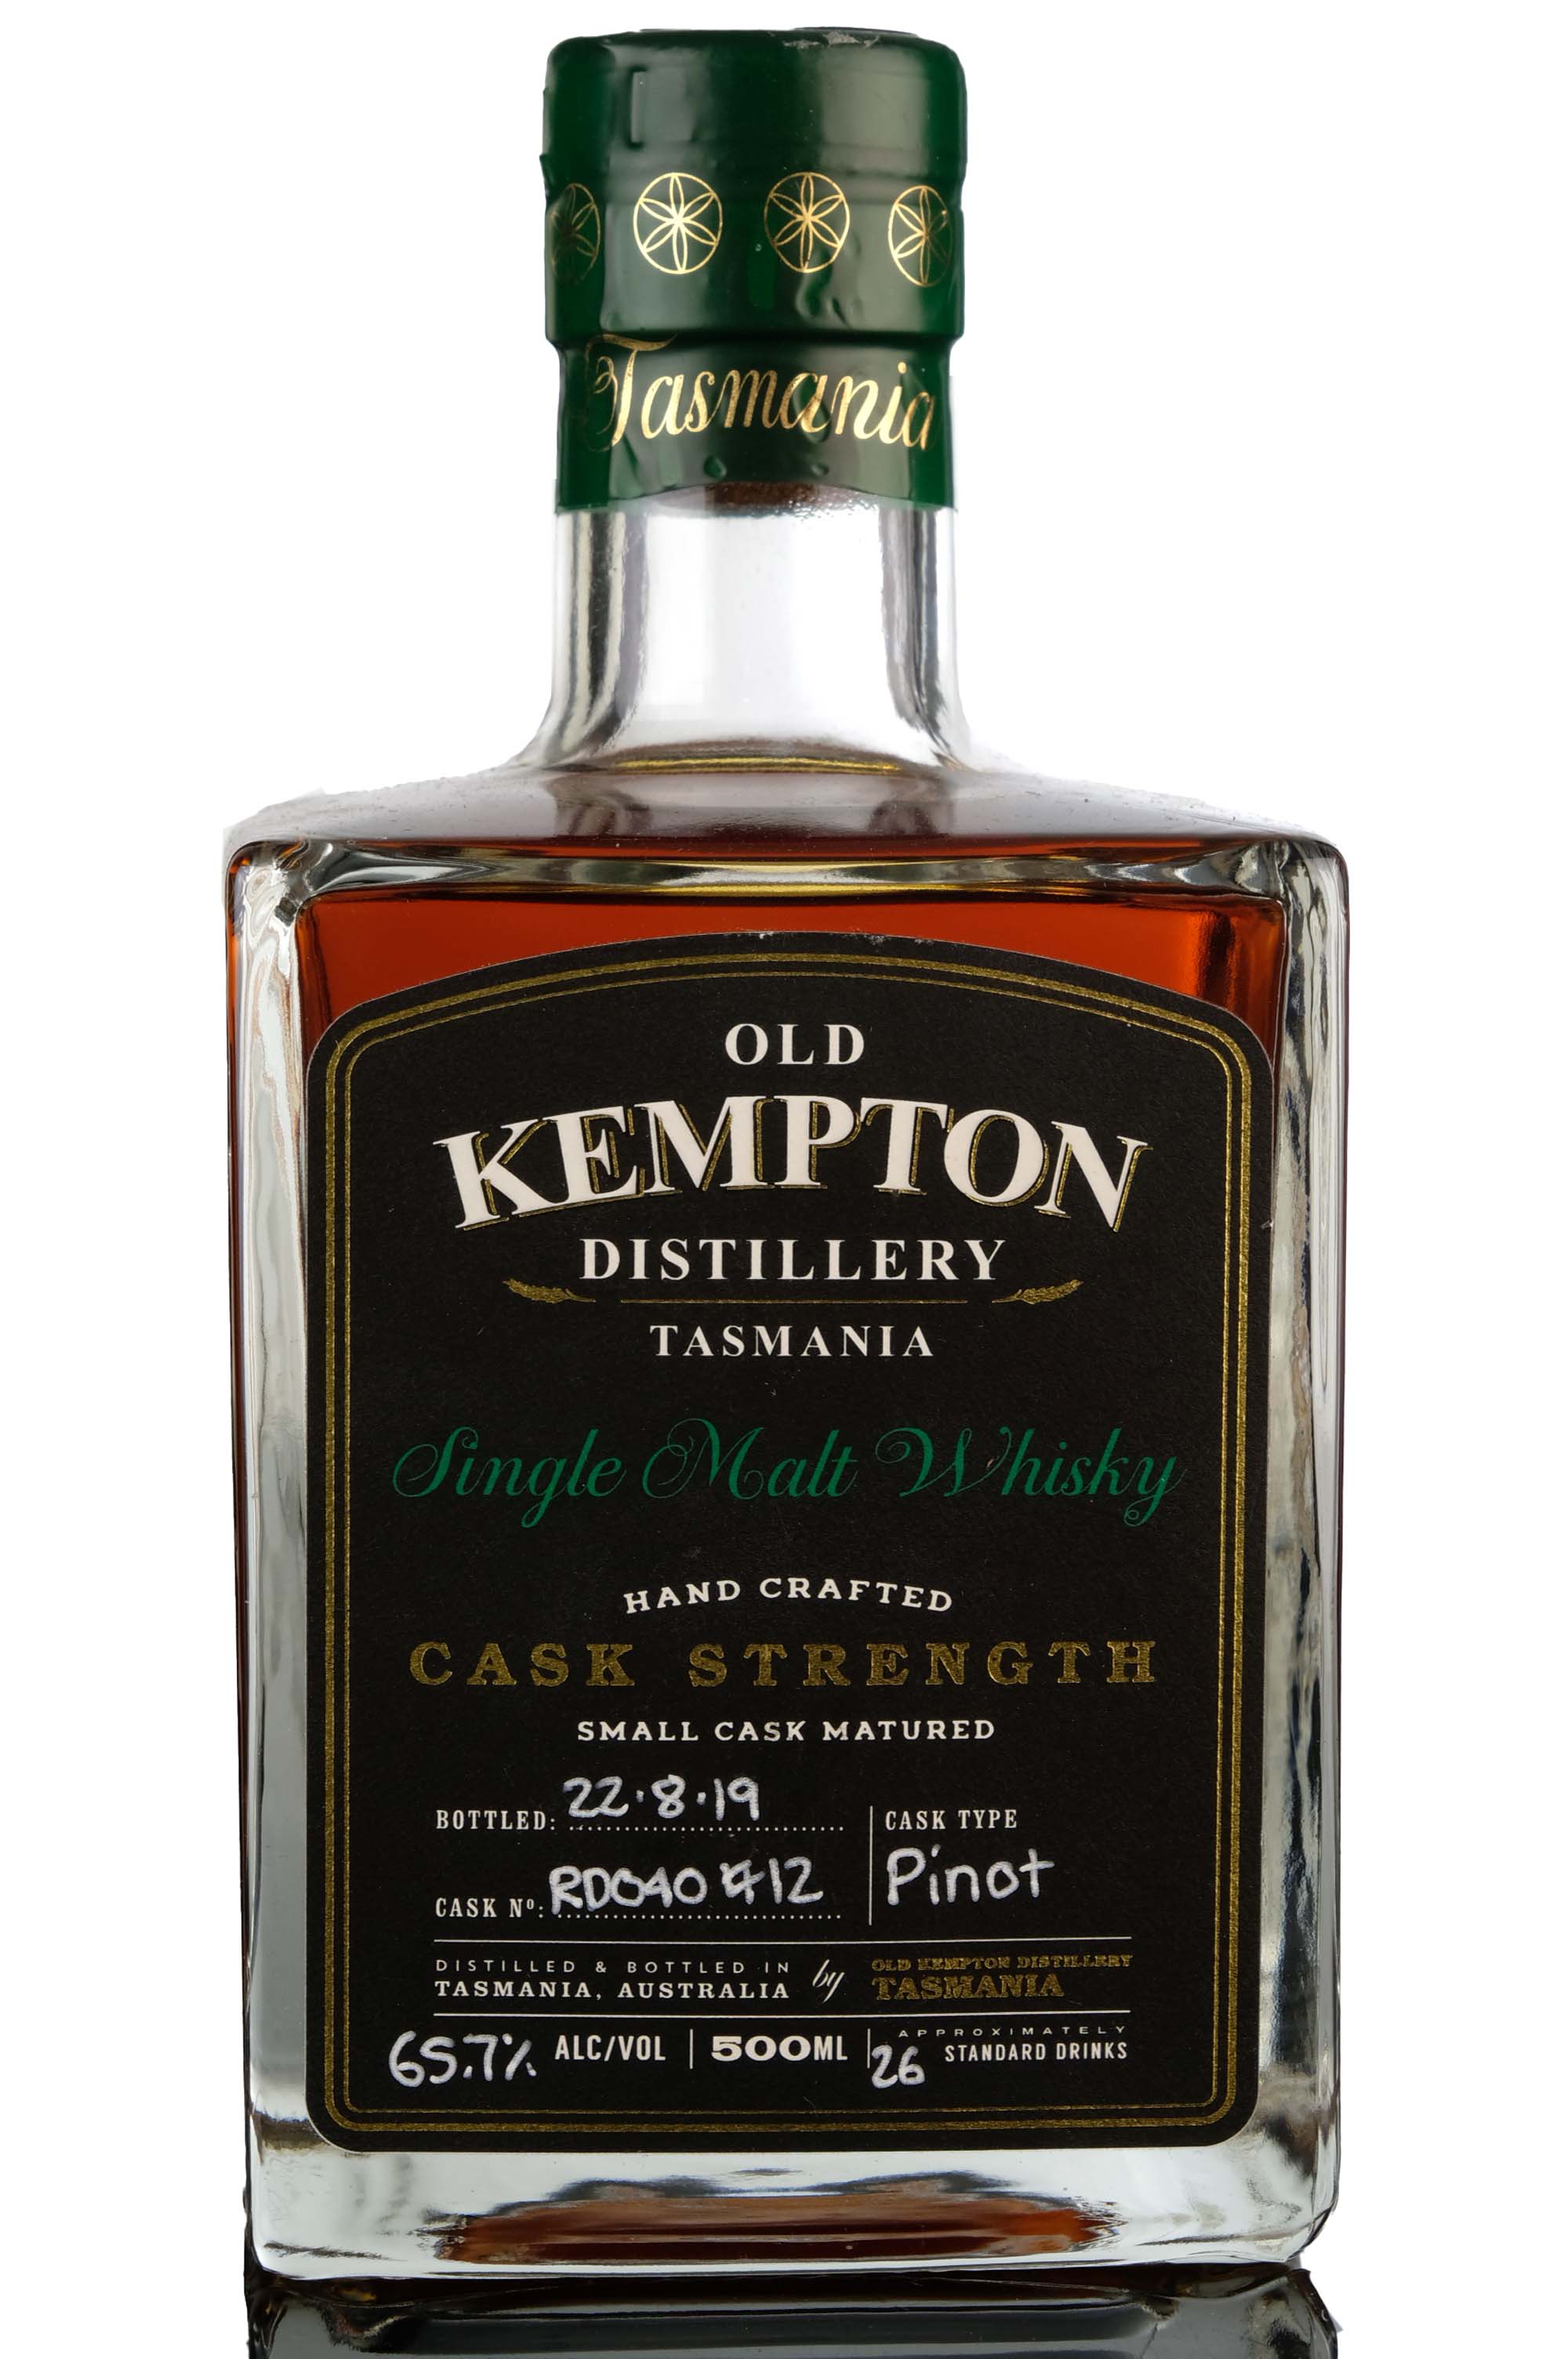 Old Kempton Small Cask Matured - Cask RD040 #12